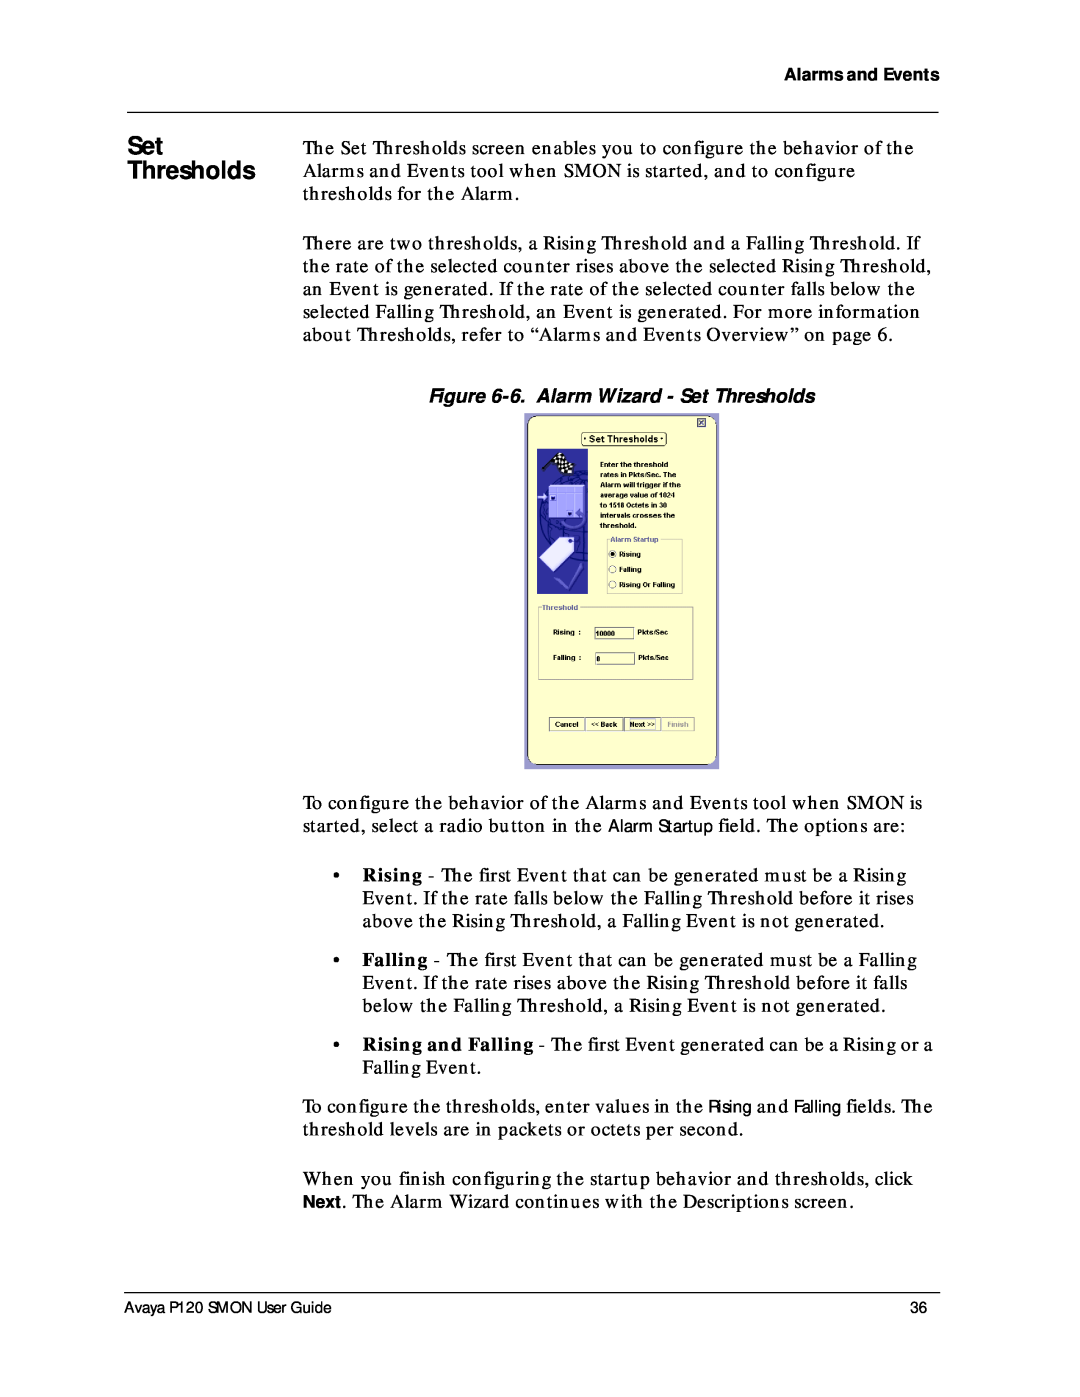 Avaya P120 SMON manual 6. Alarm Wizard - Set Thresholds 